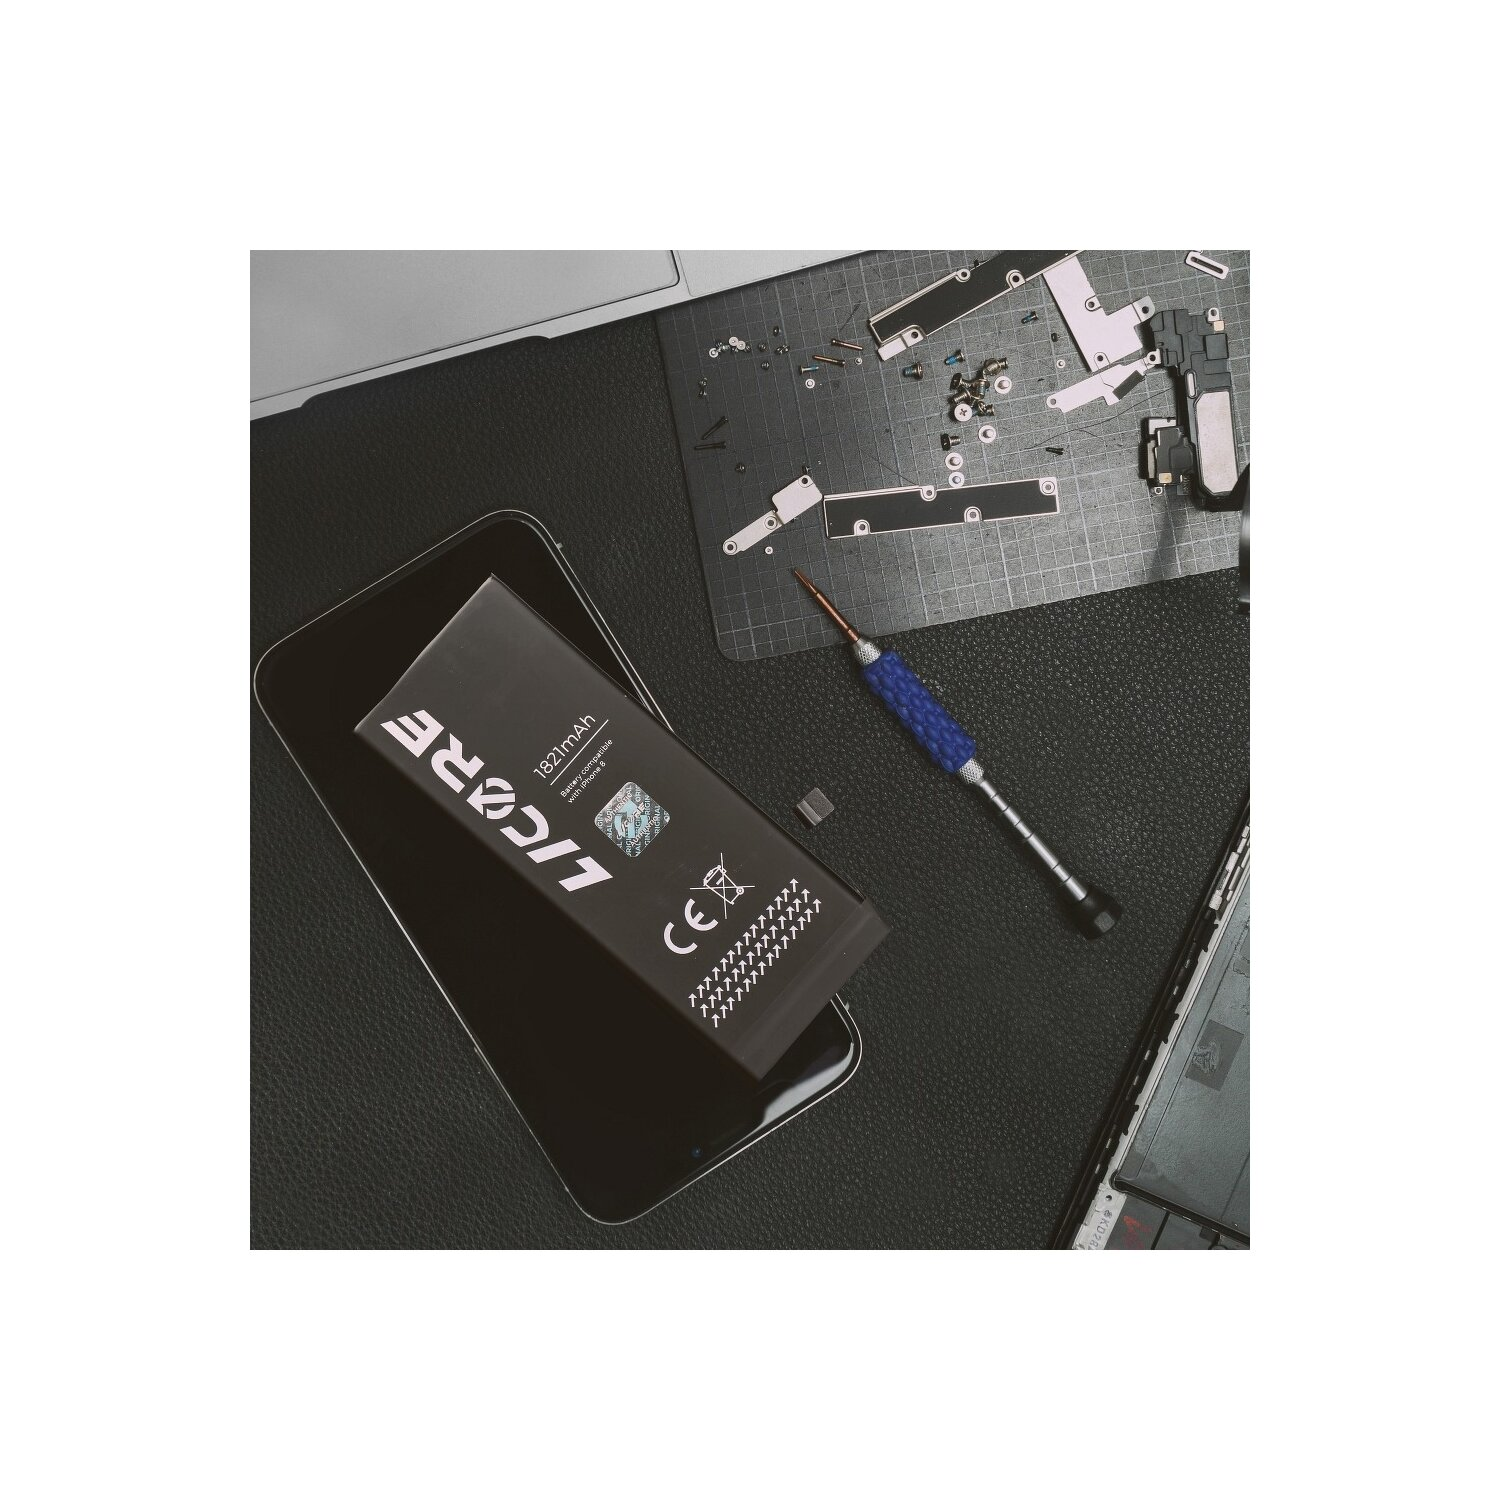 Akku, Ersatz iPhone Licore COFI mAh Akku li-Ion mAh Pro 11 3046 3046 kompatibel mit